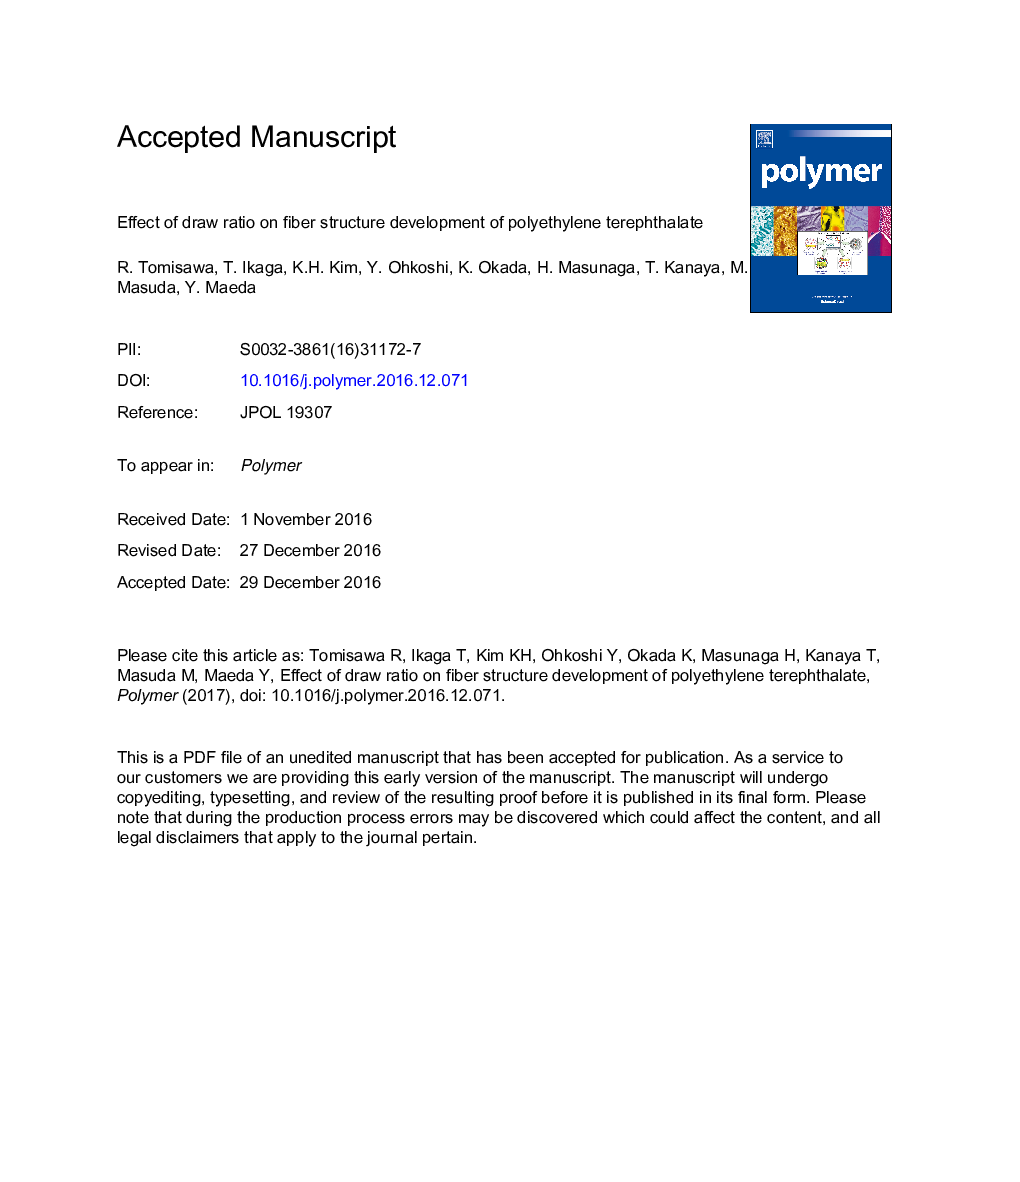 Effect of draw ratio on fiber structure development of polyethylene terephthalate